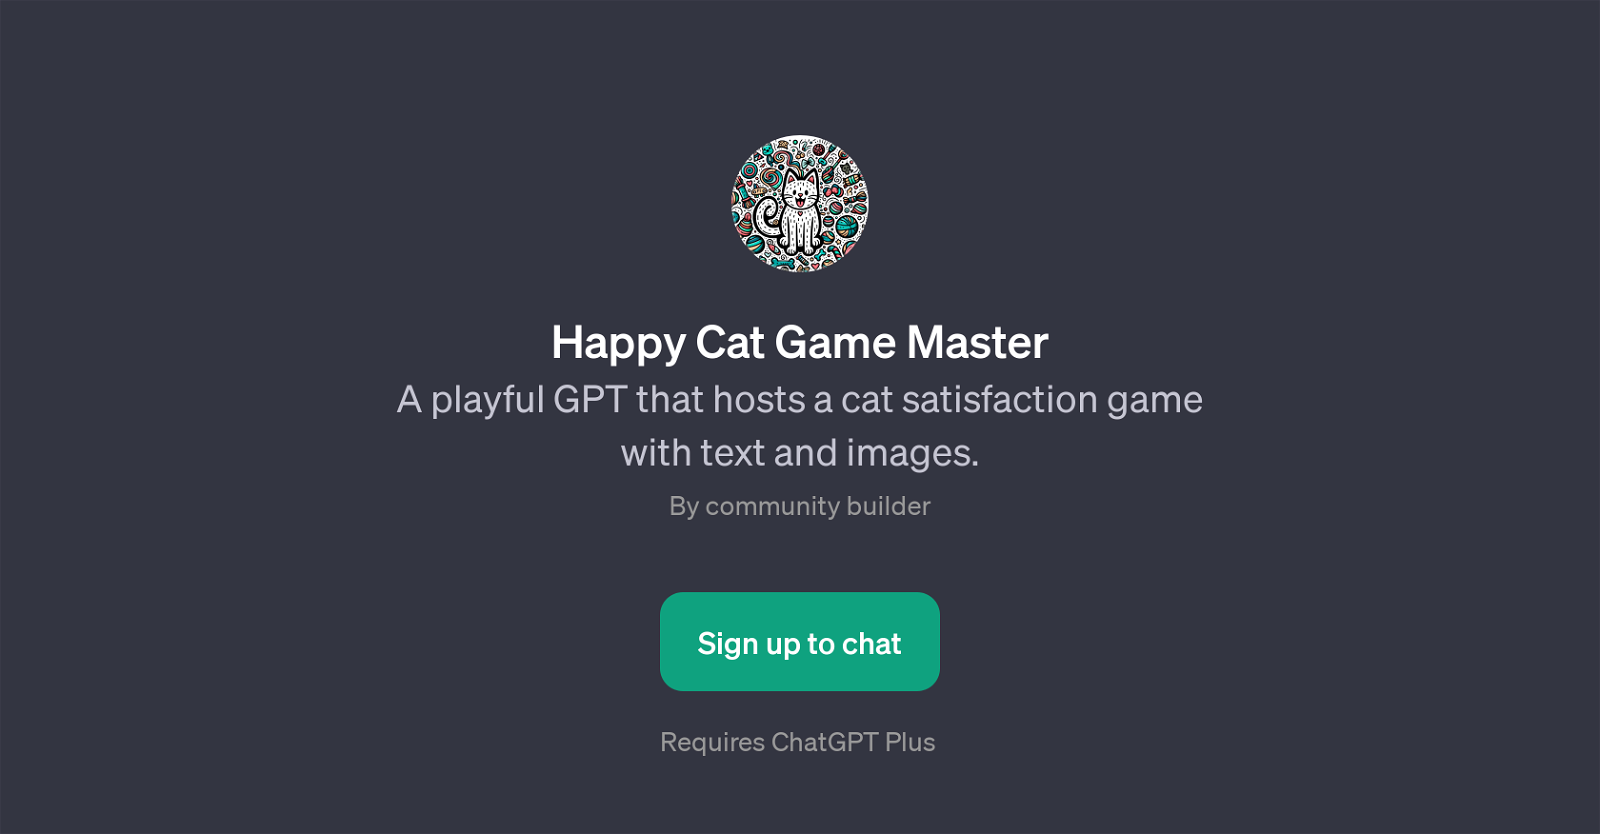 Happy Cat Game Master website